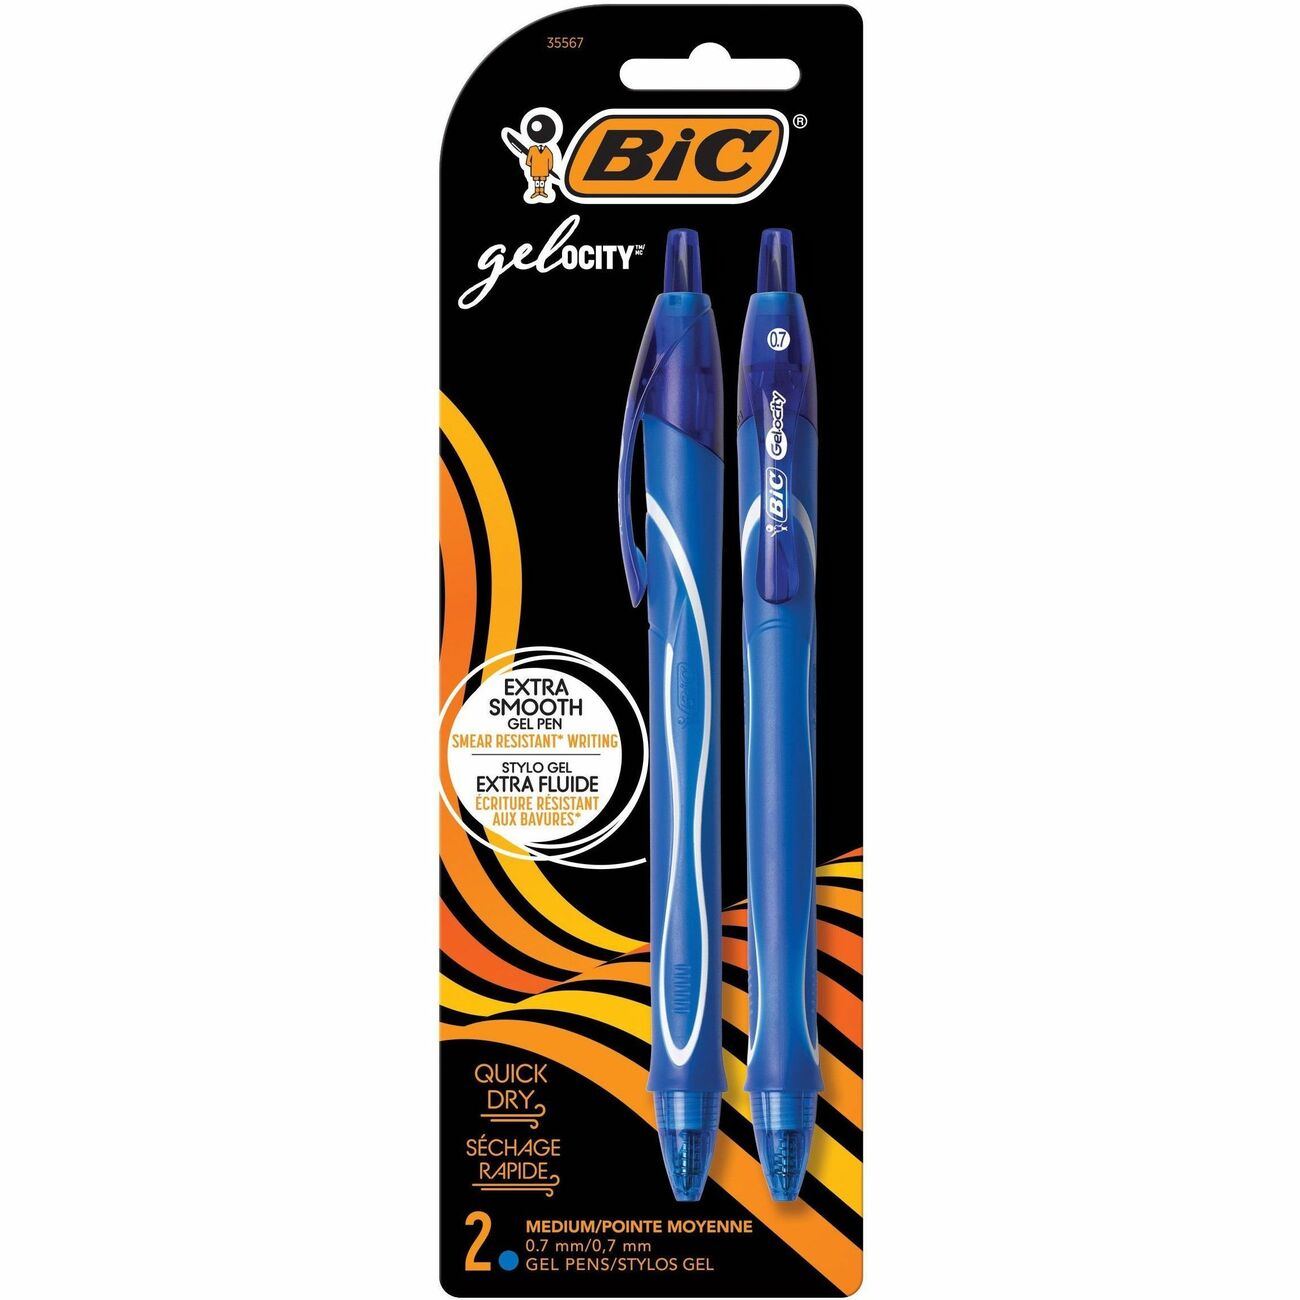 BIC Gel-Ocity Retractable Rollerball Pens